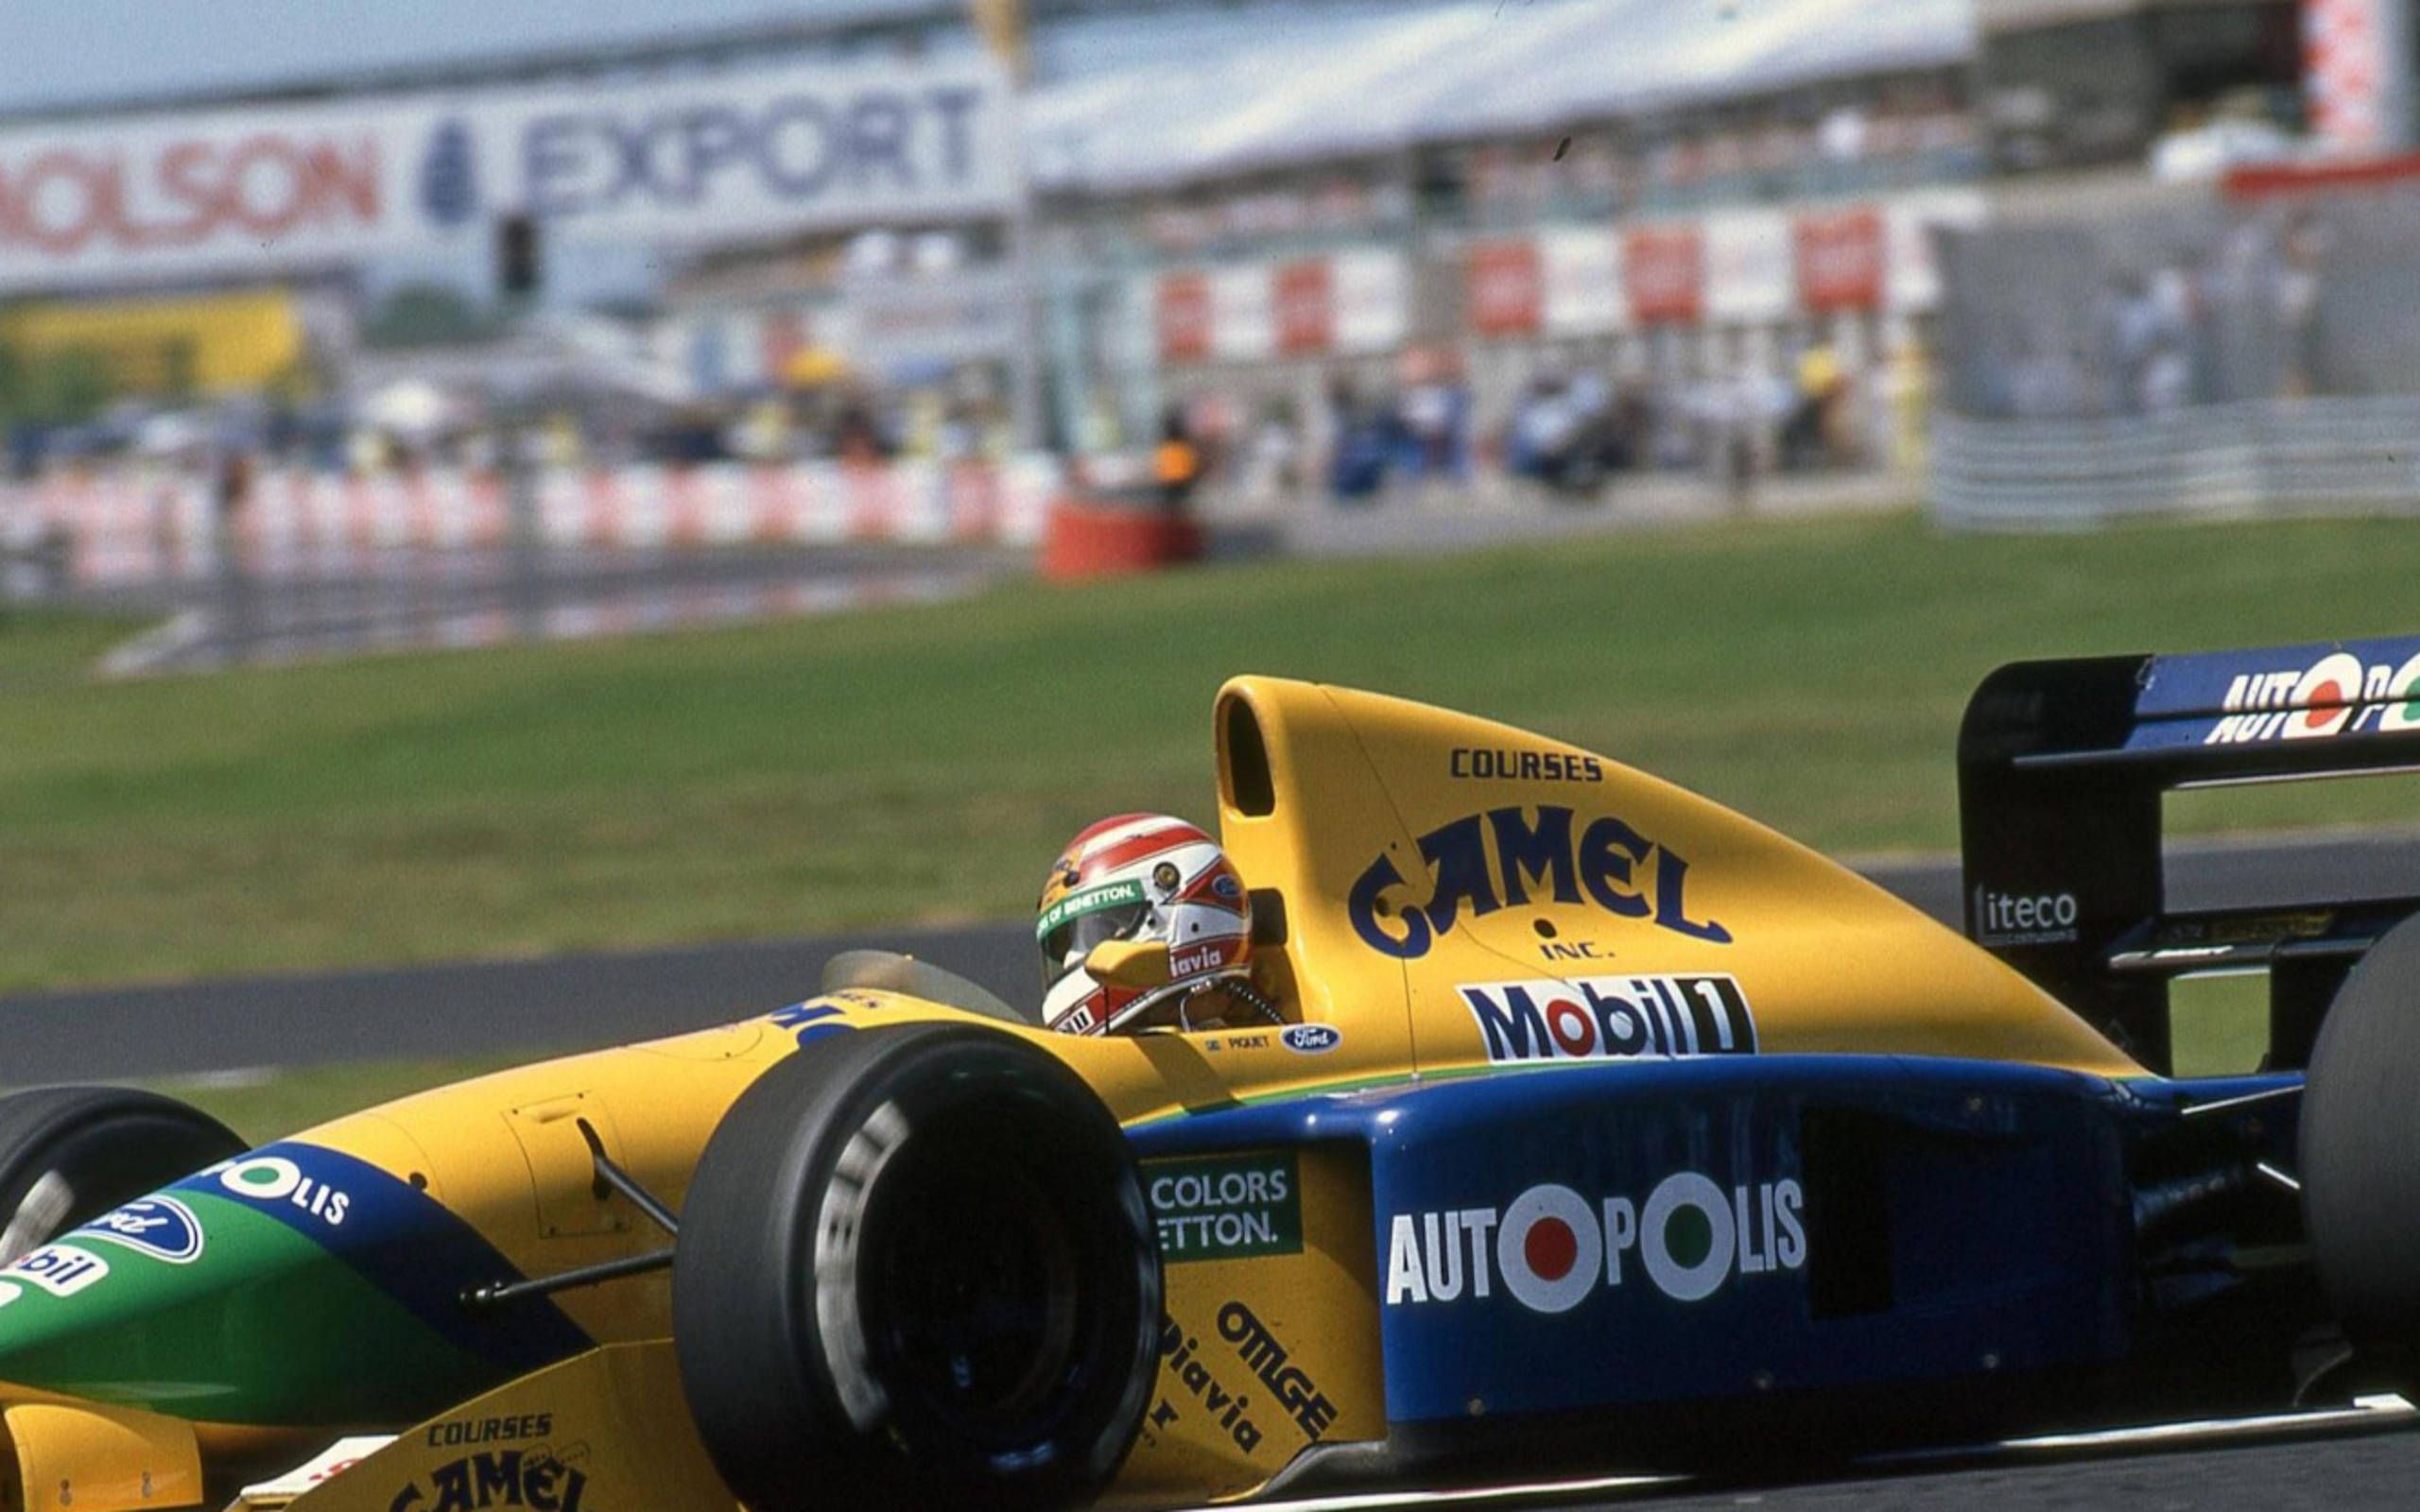 Ex Michael Schumacher 1991 Benetton Cosworth F1 Car Heads To Auction